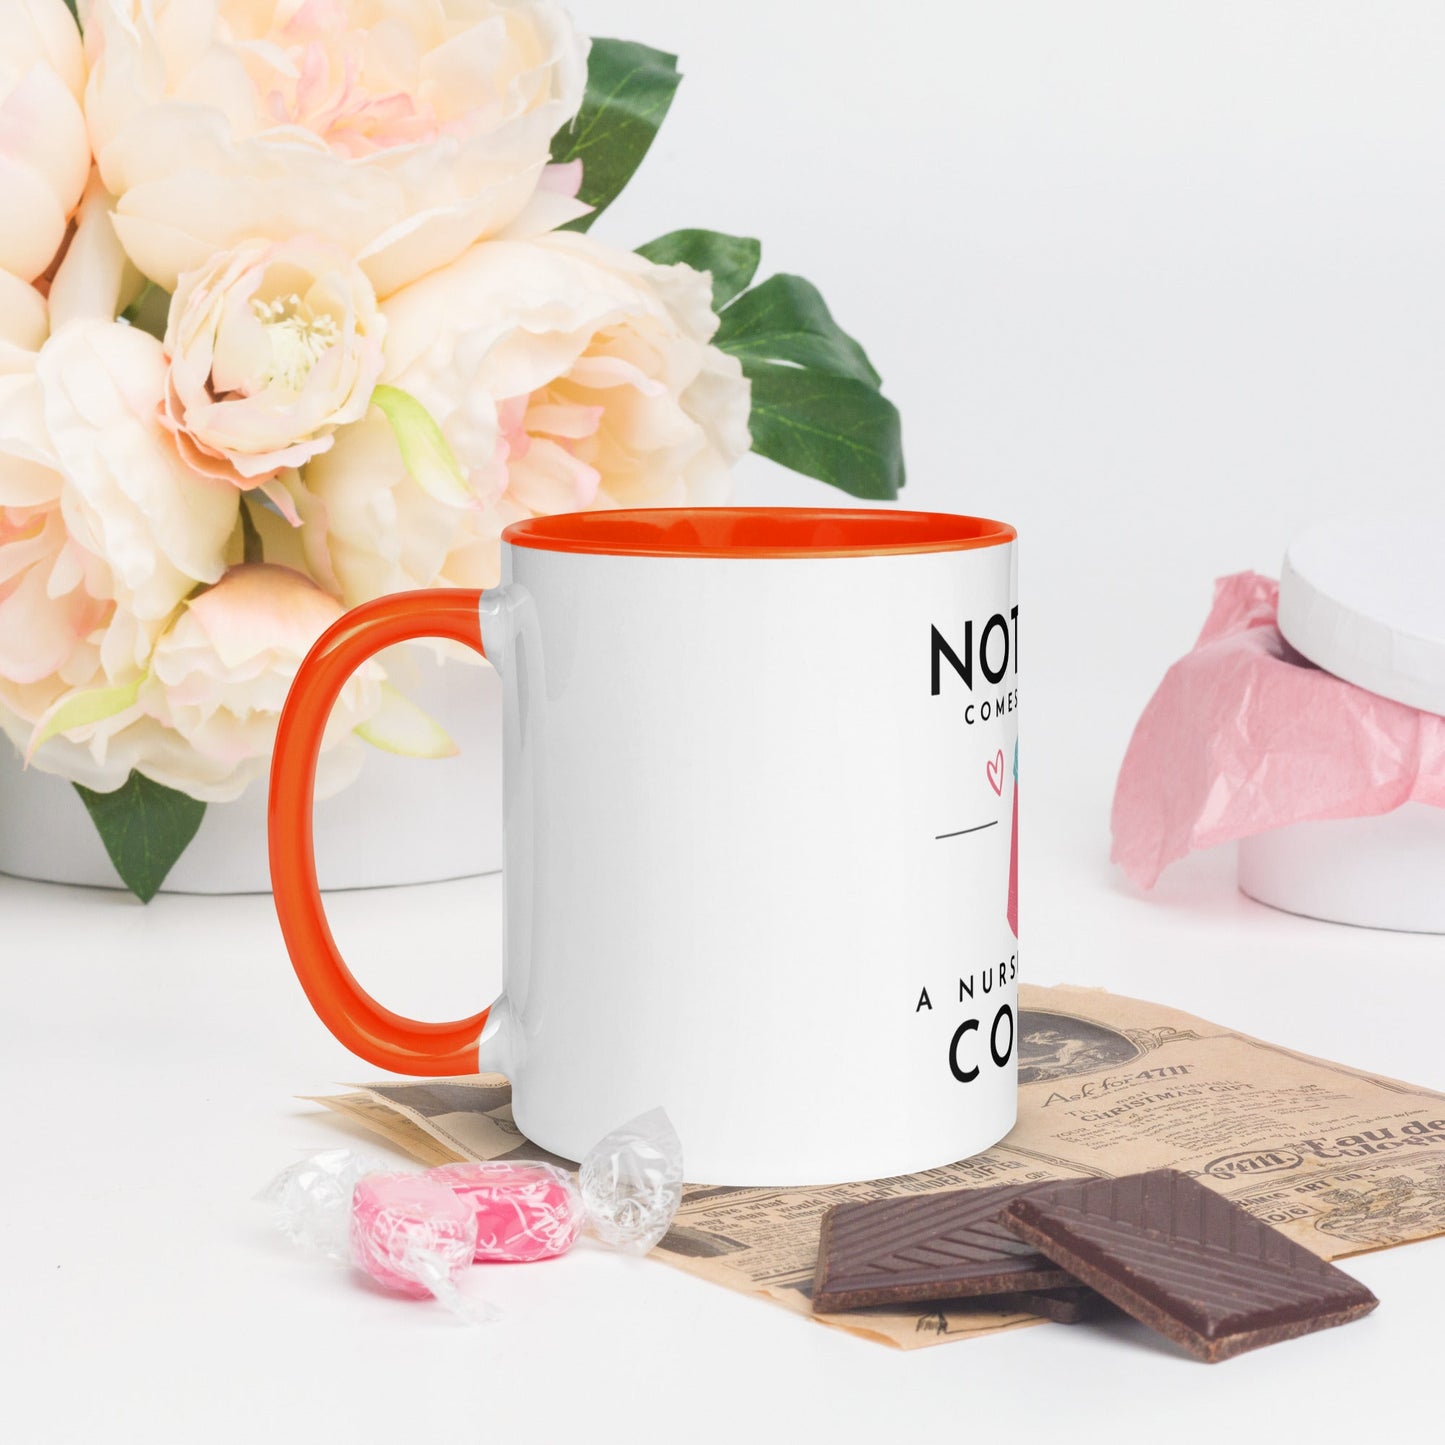 Nurse and Her Coffee - Mug with Color Inside